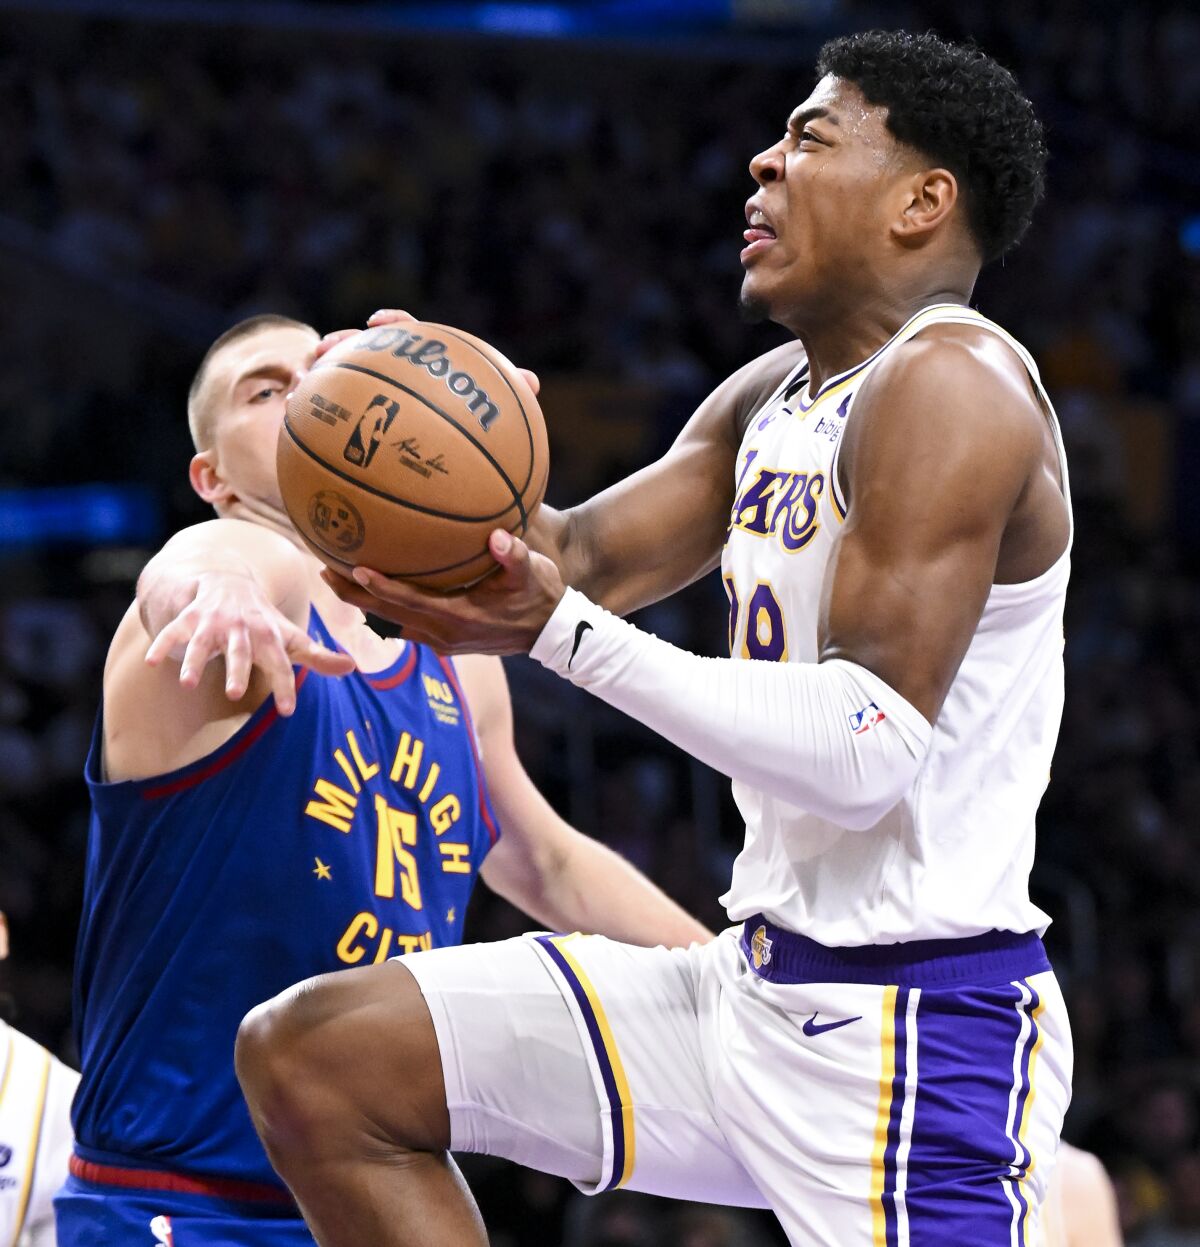 Lakers forward Rui Hachimura elevates for a layup against Nuggets center Nikola Jokic.